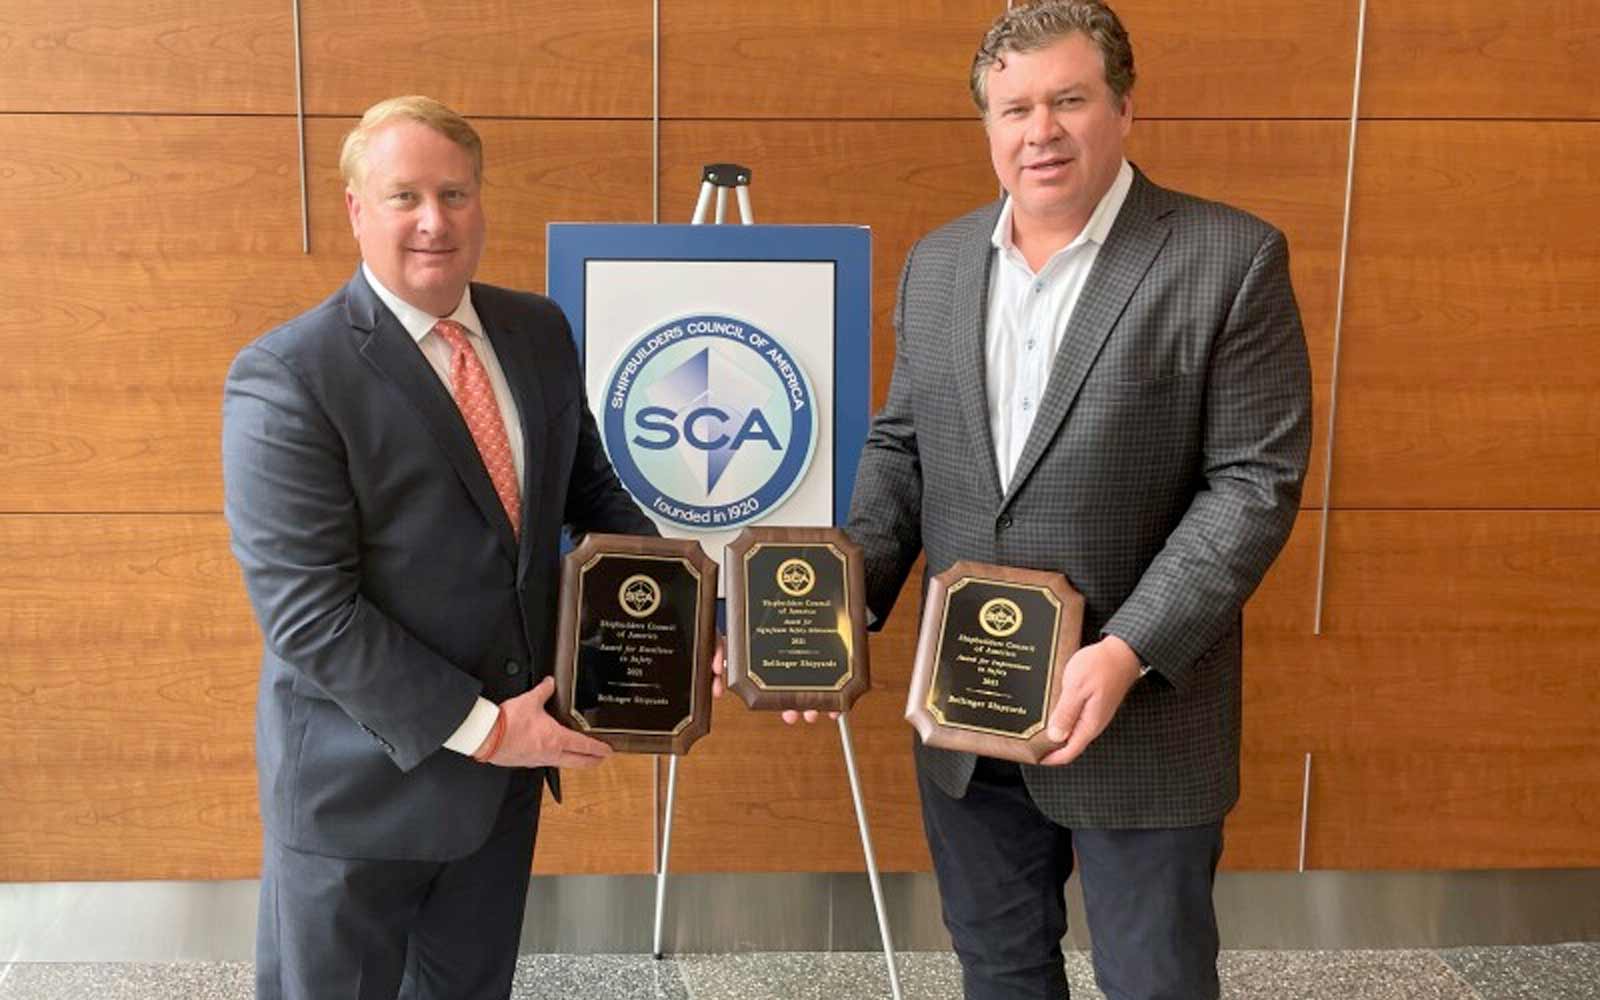 Alabama Shipyard Wins SCA Safety Awards